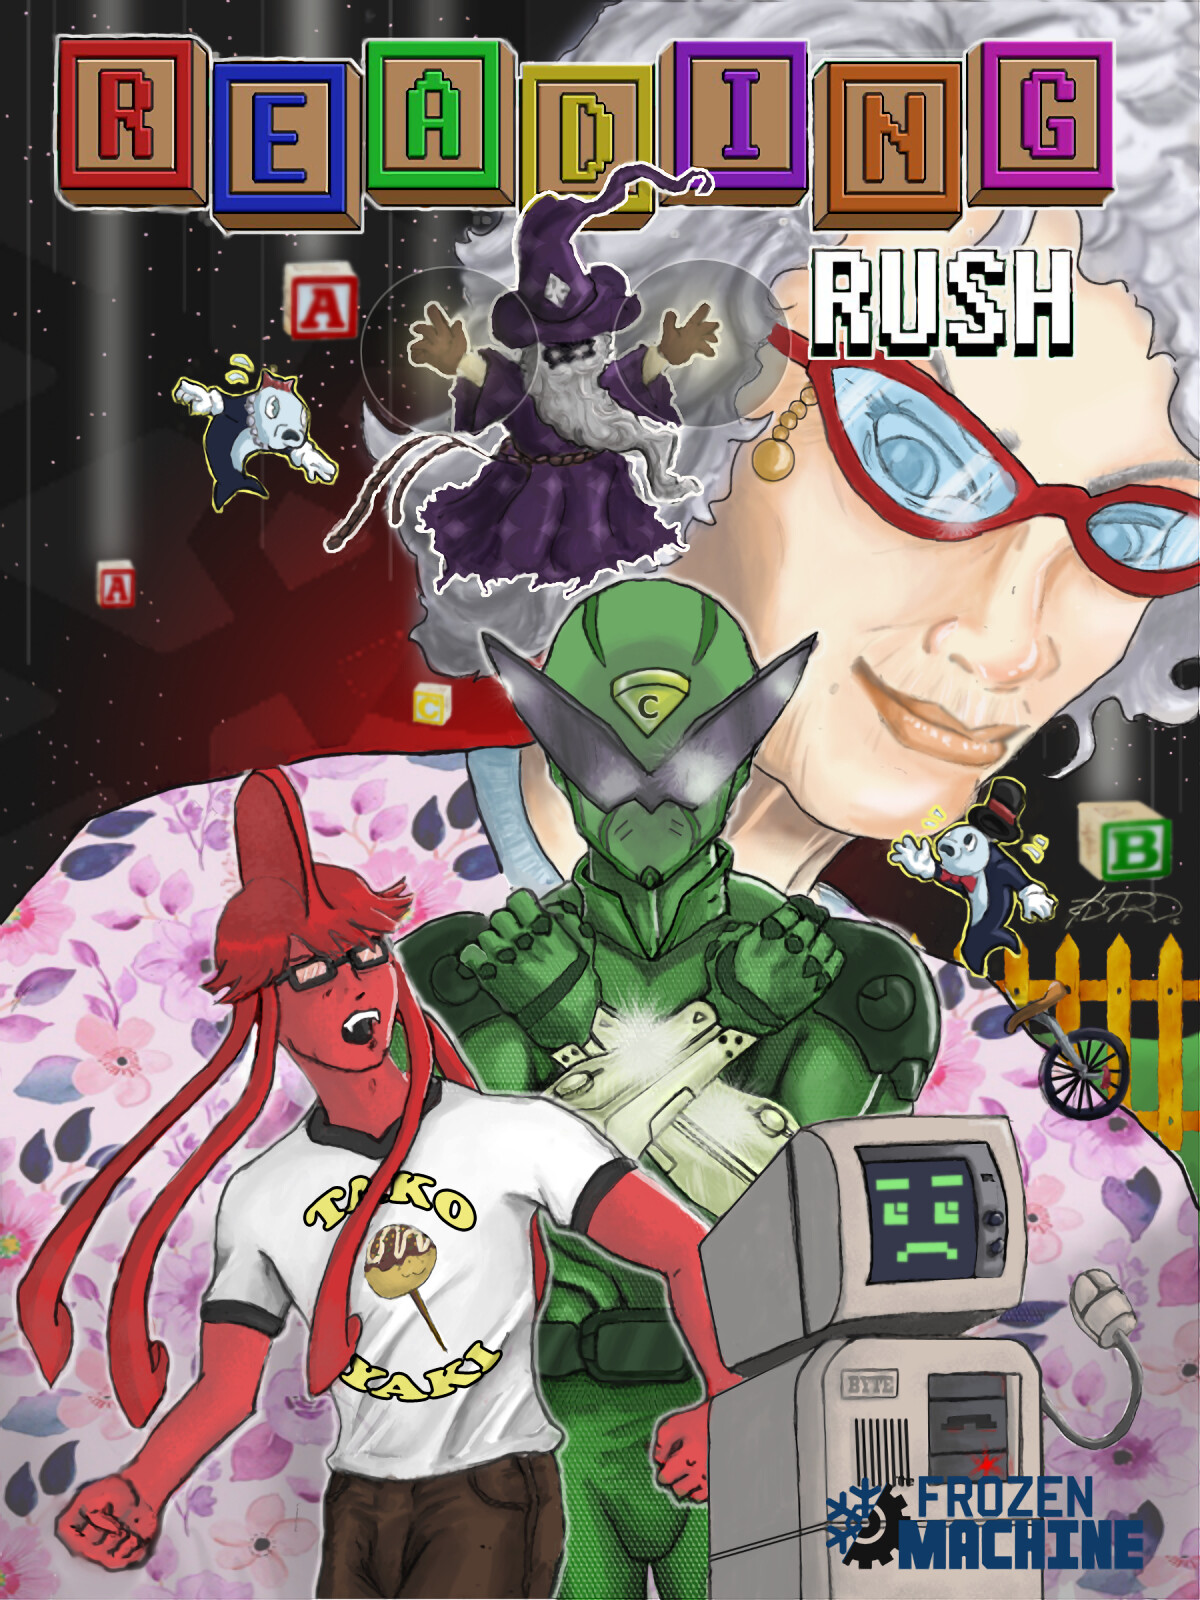 Comics with Rush - Comic Studio